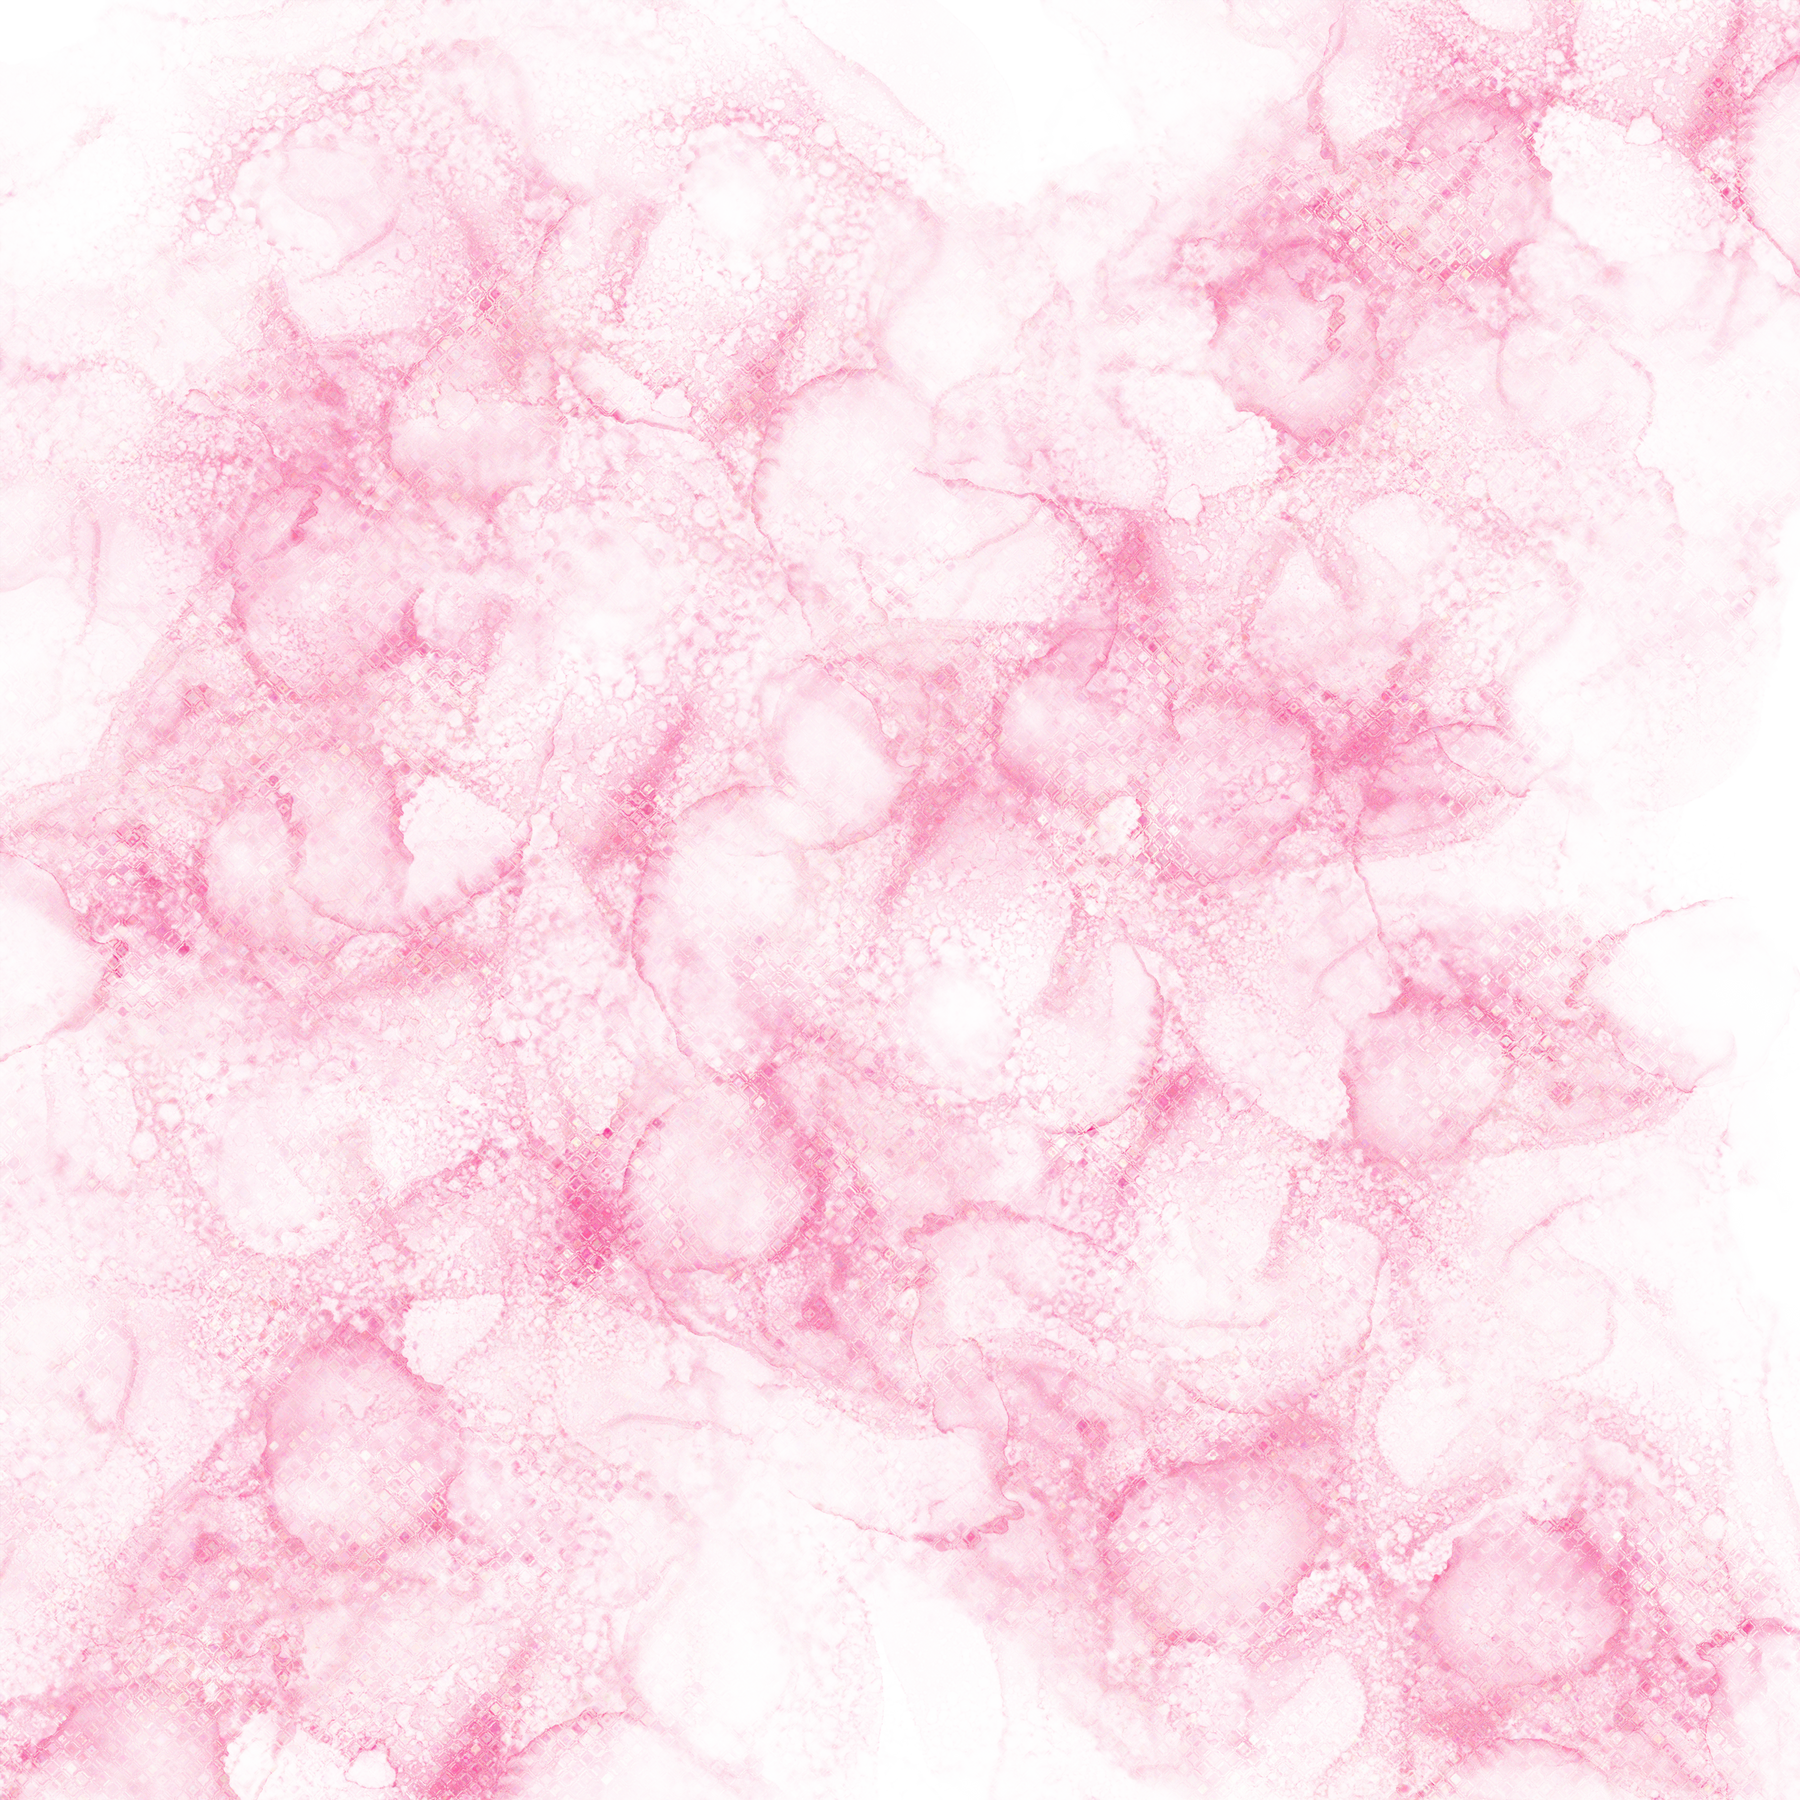 Abstract Pink Splash Background